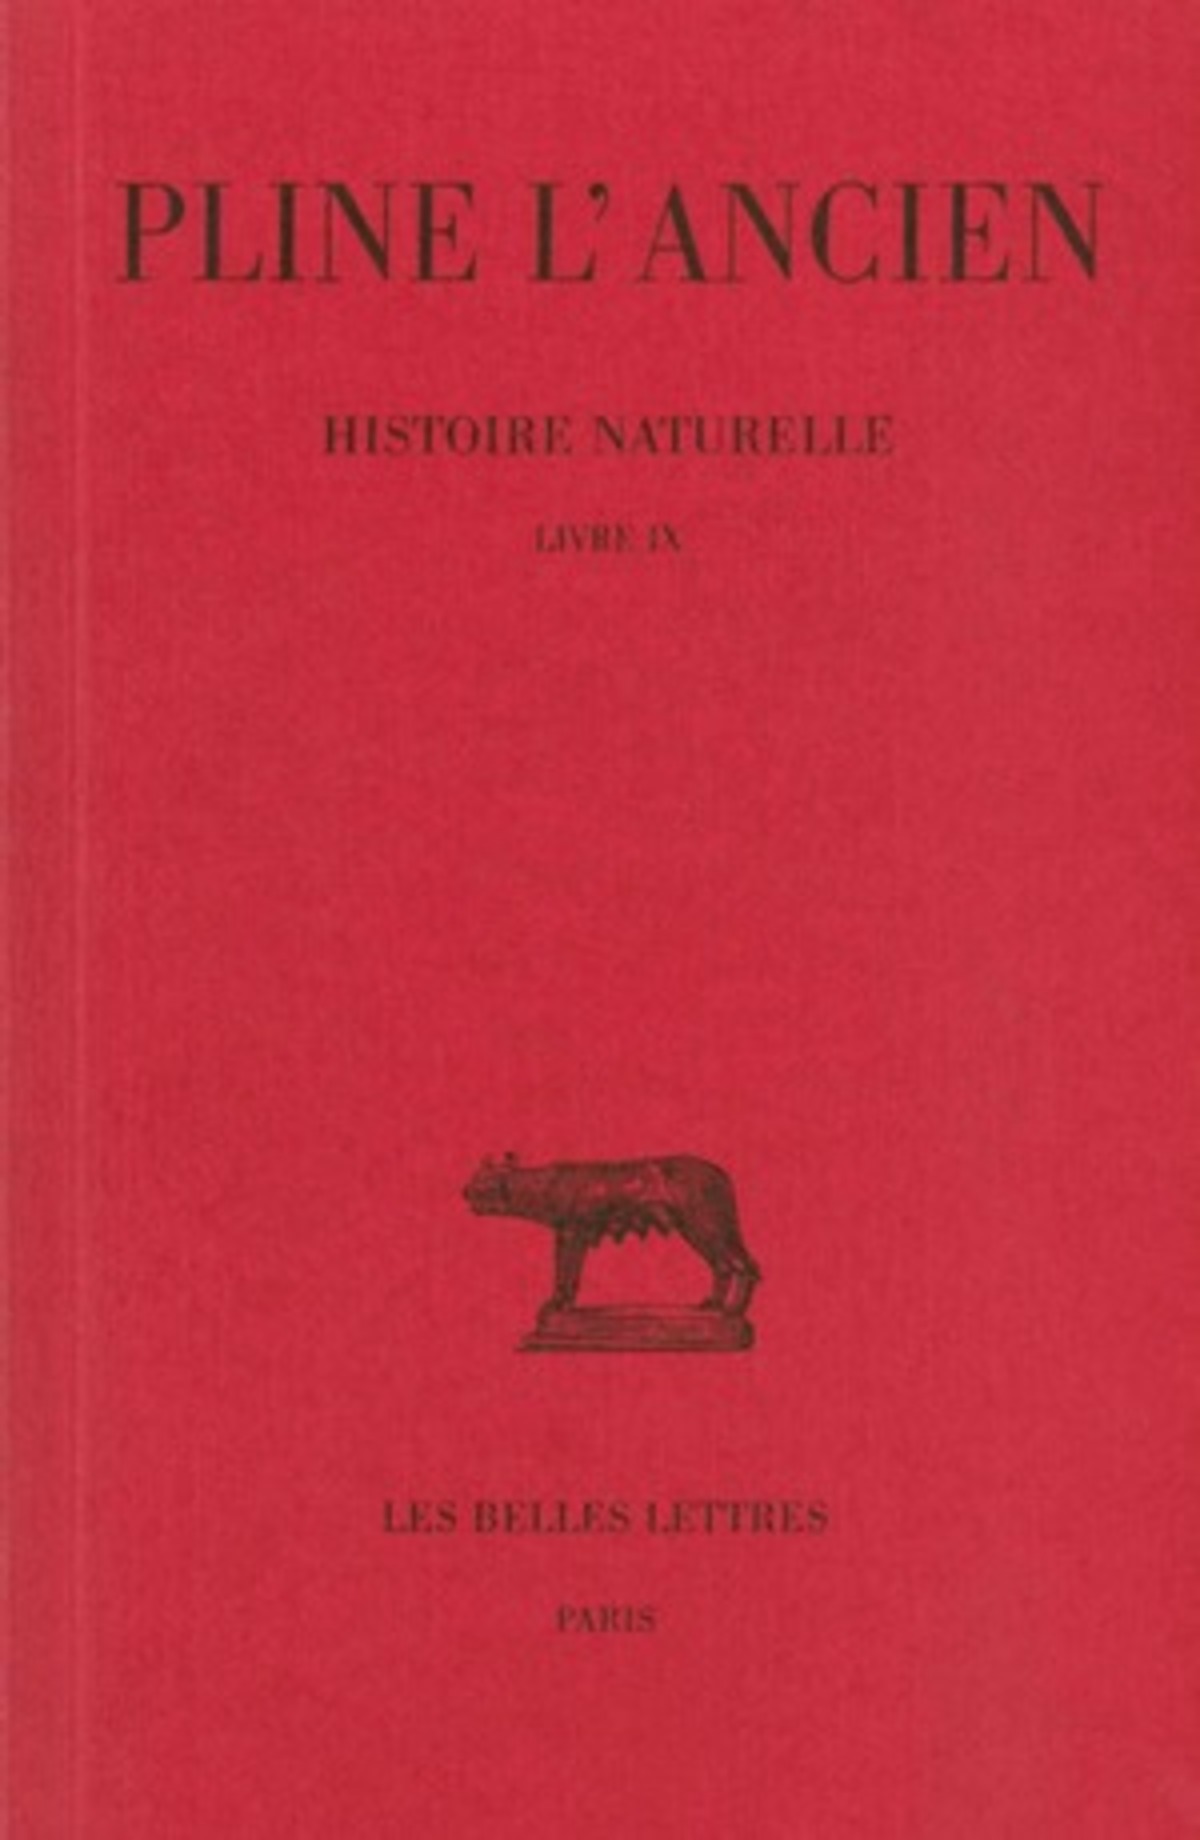 Histoire naturelle. Livre IX